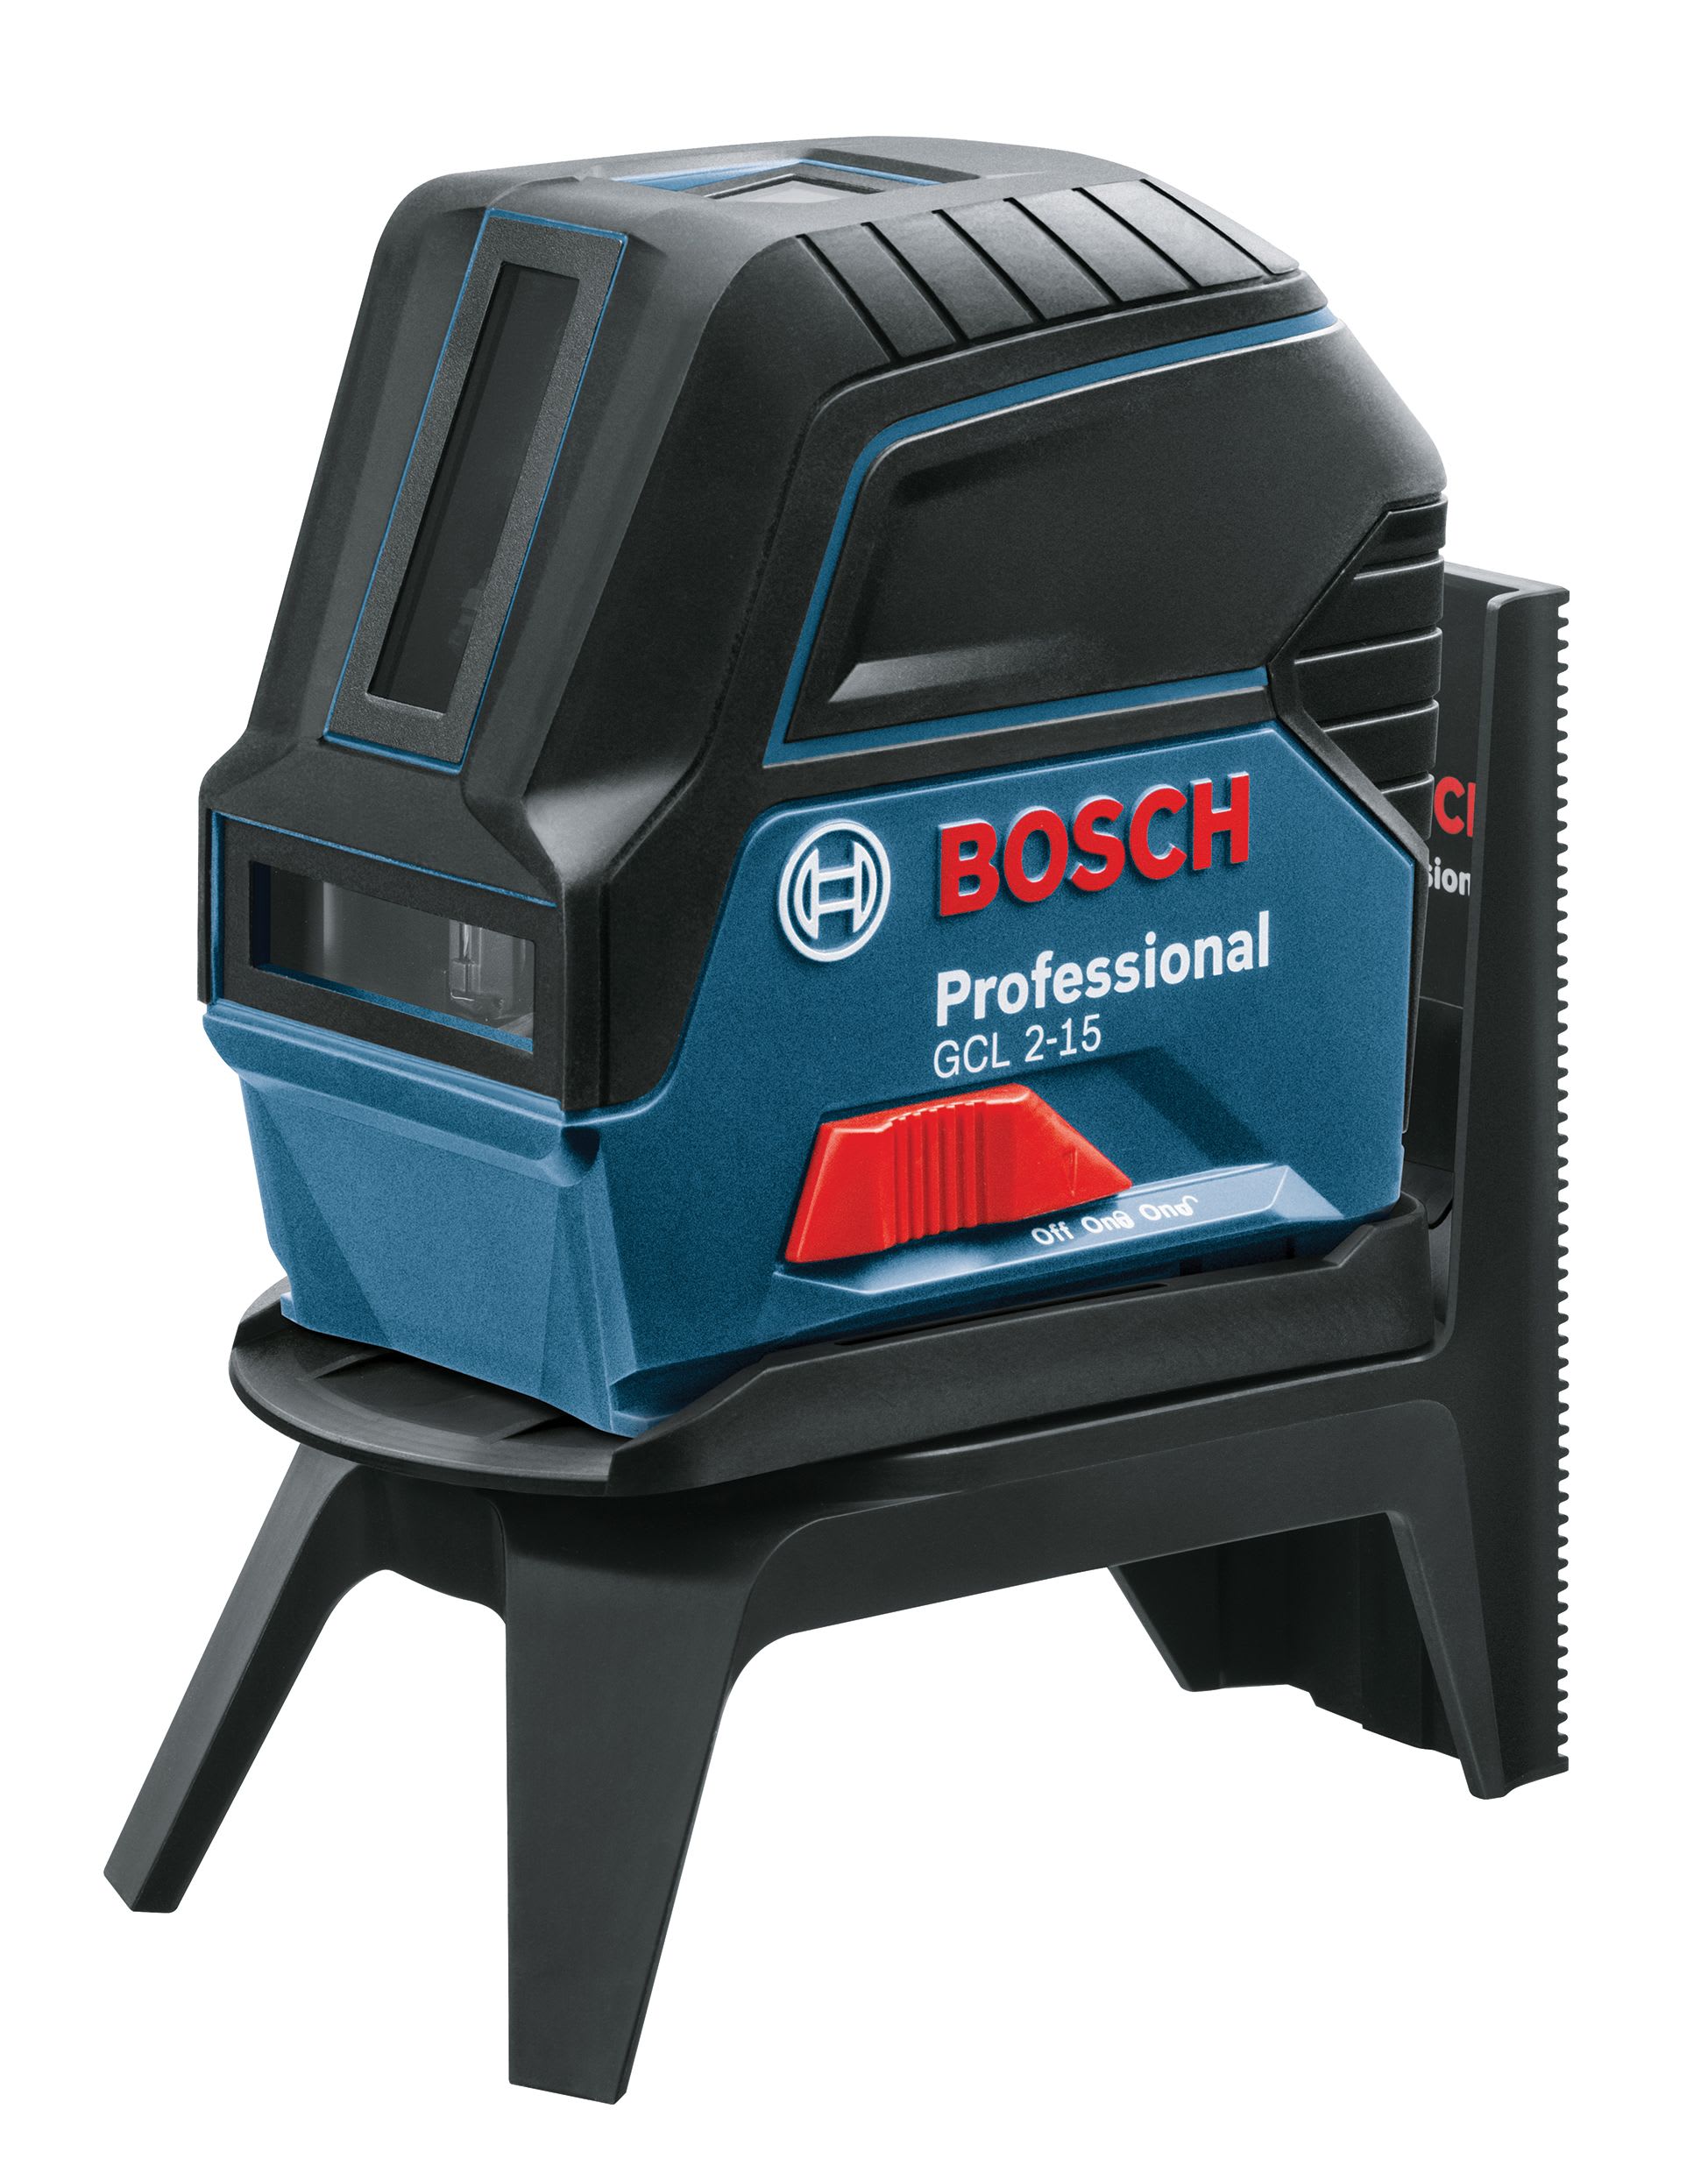 Bosch Professional GCL 2-15 Combi Laser Level